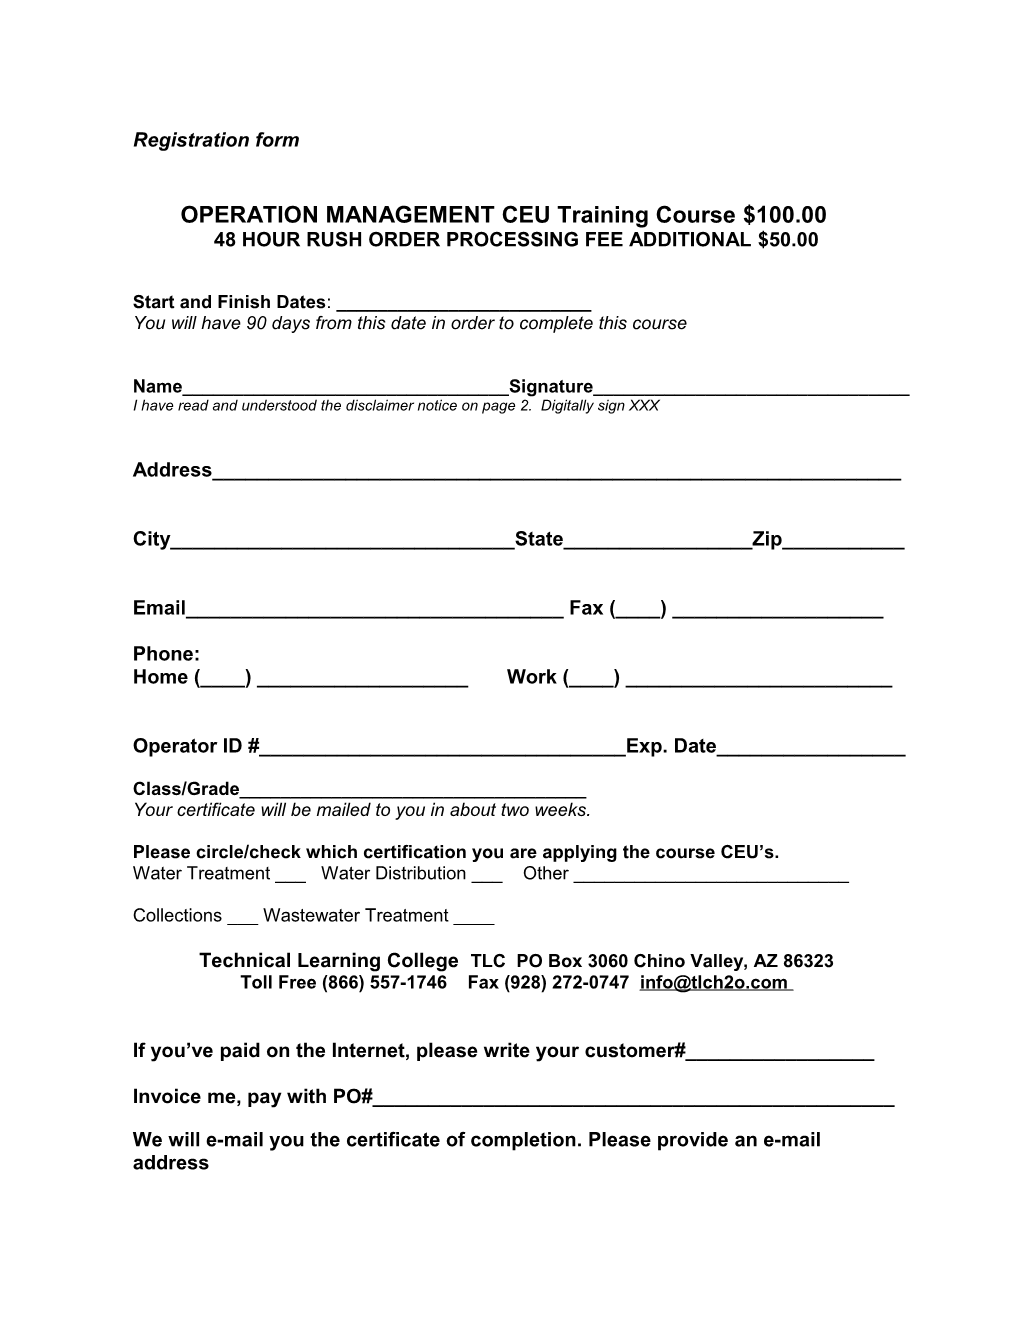 OPERATION MANAGEMENT CEU Training Course $100.00